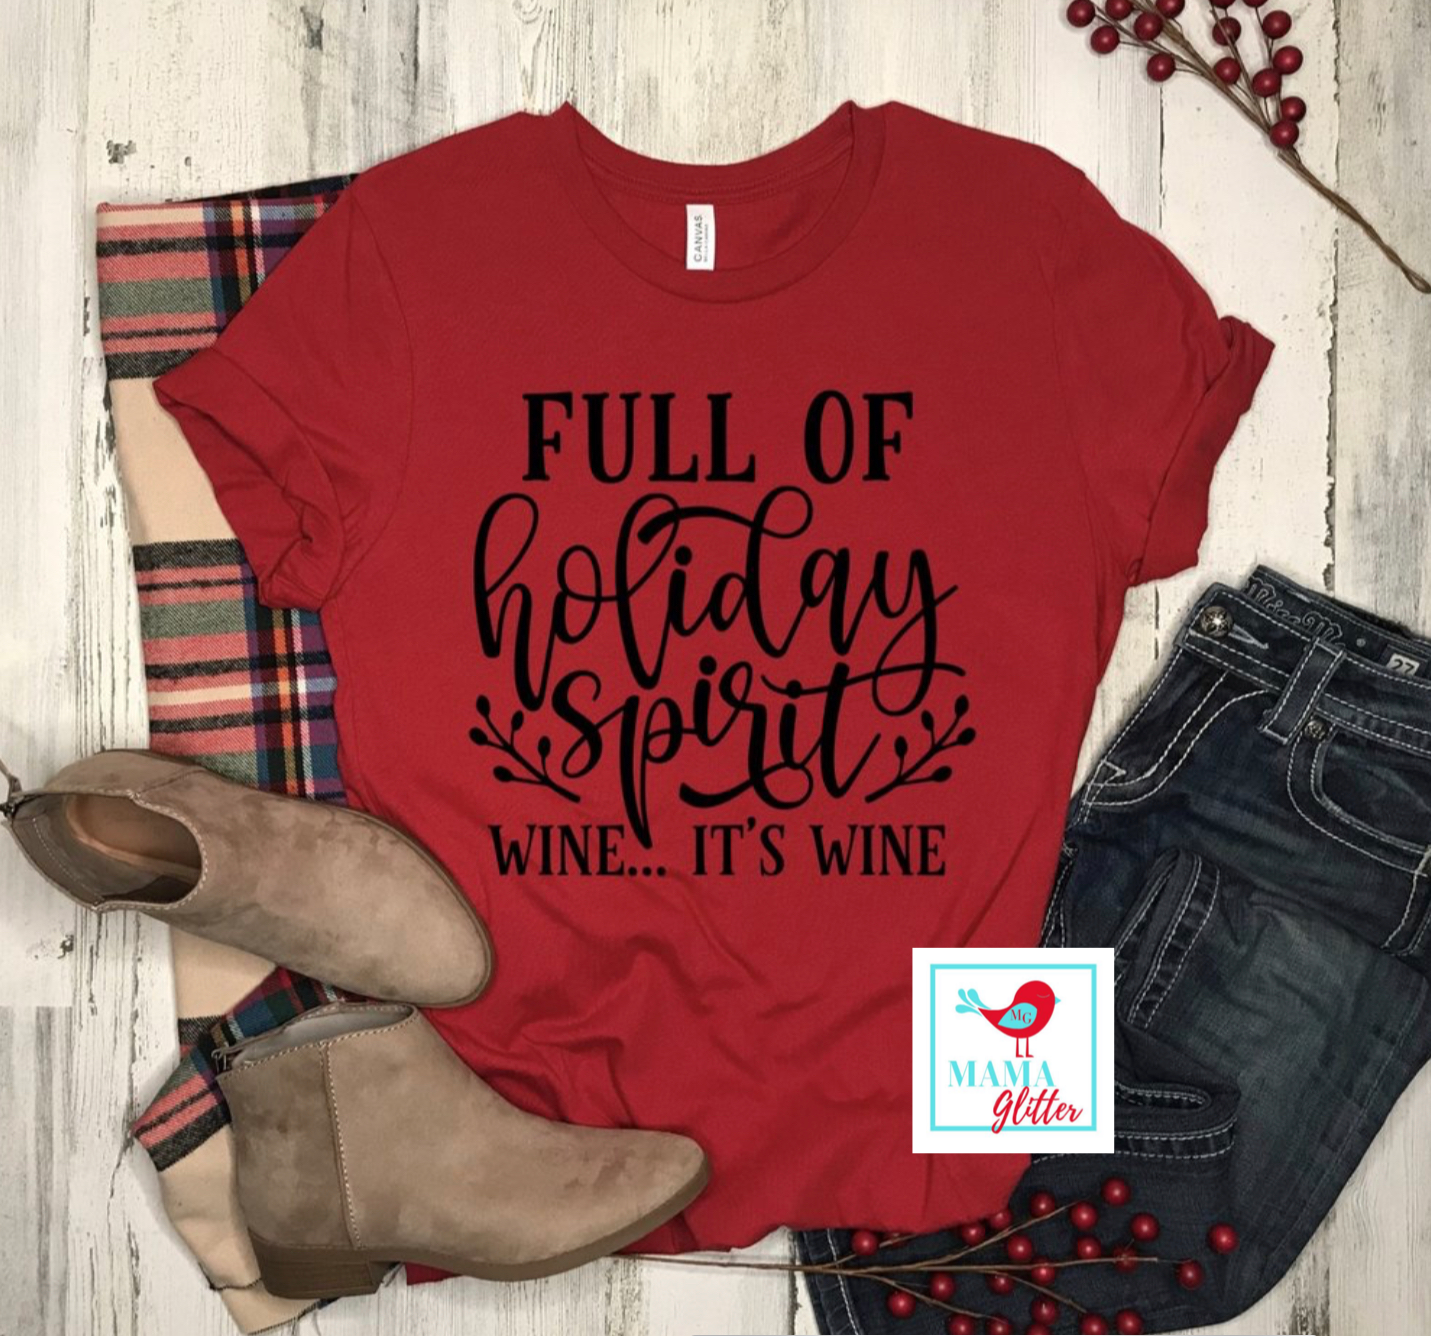 Full of Holiday Spirit ... Wine, its wine